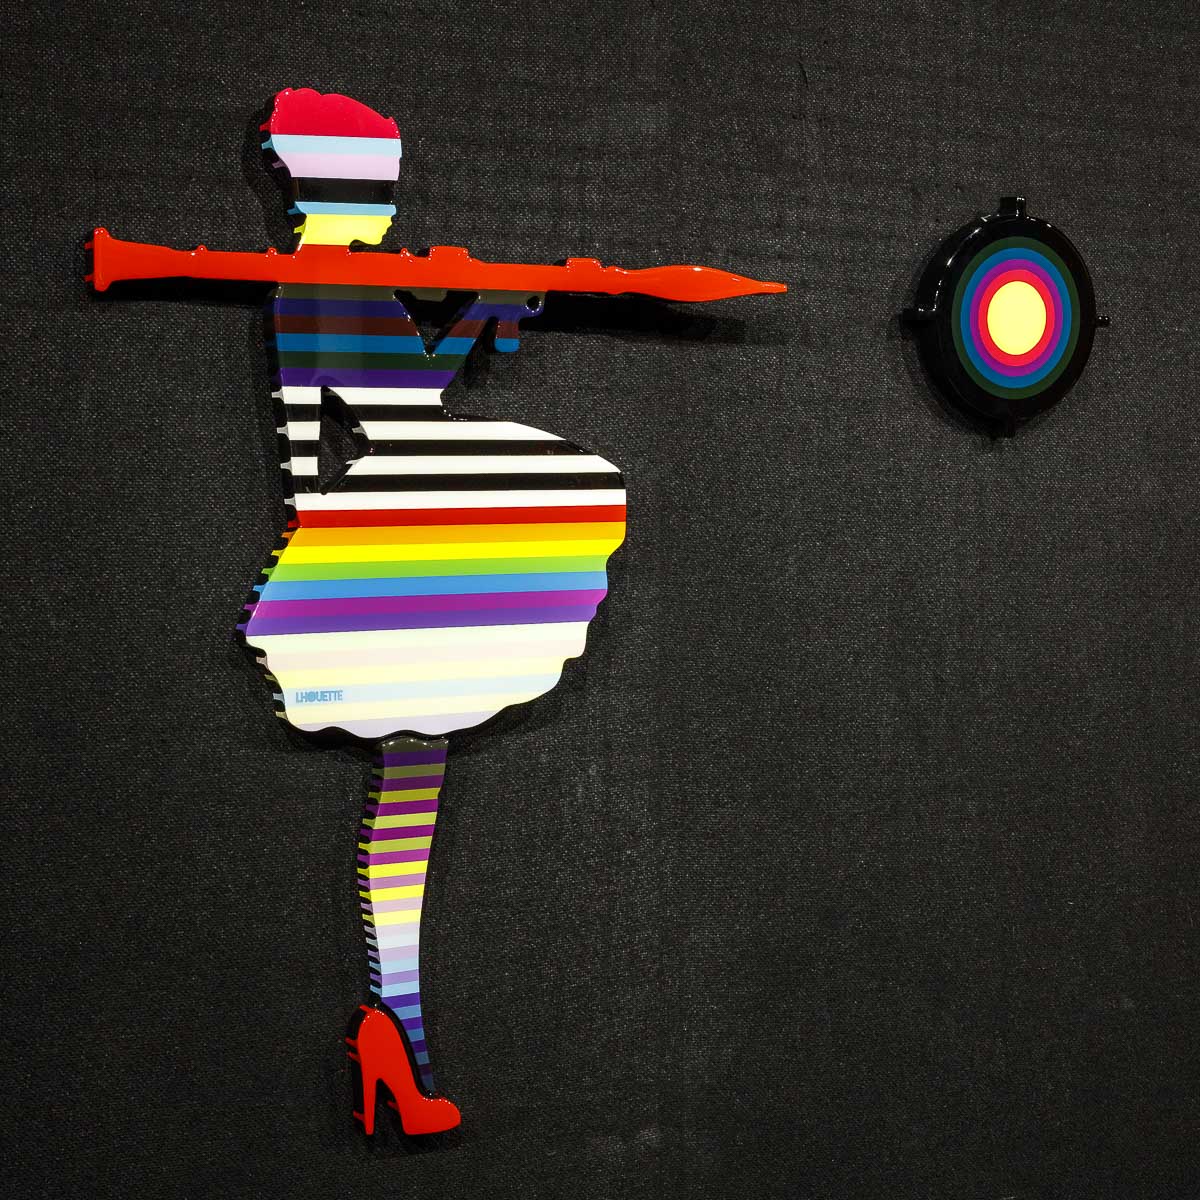 Bazooka Jo Rainbow Striped Miniature Two Part Wall Sculpture - Original Lhouette Mounted